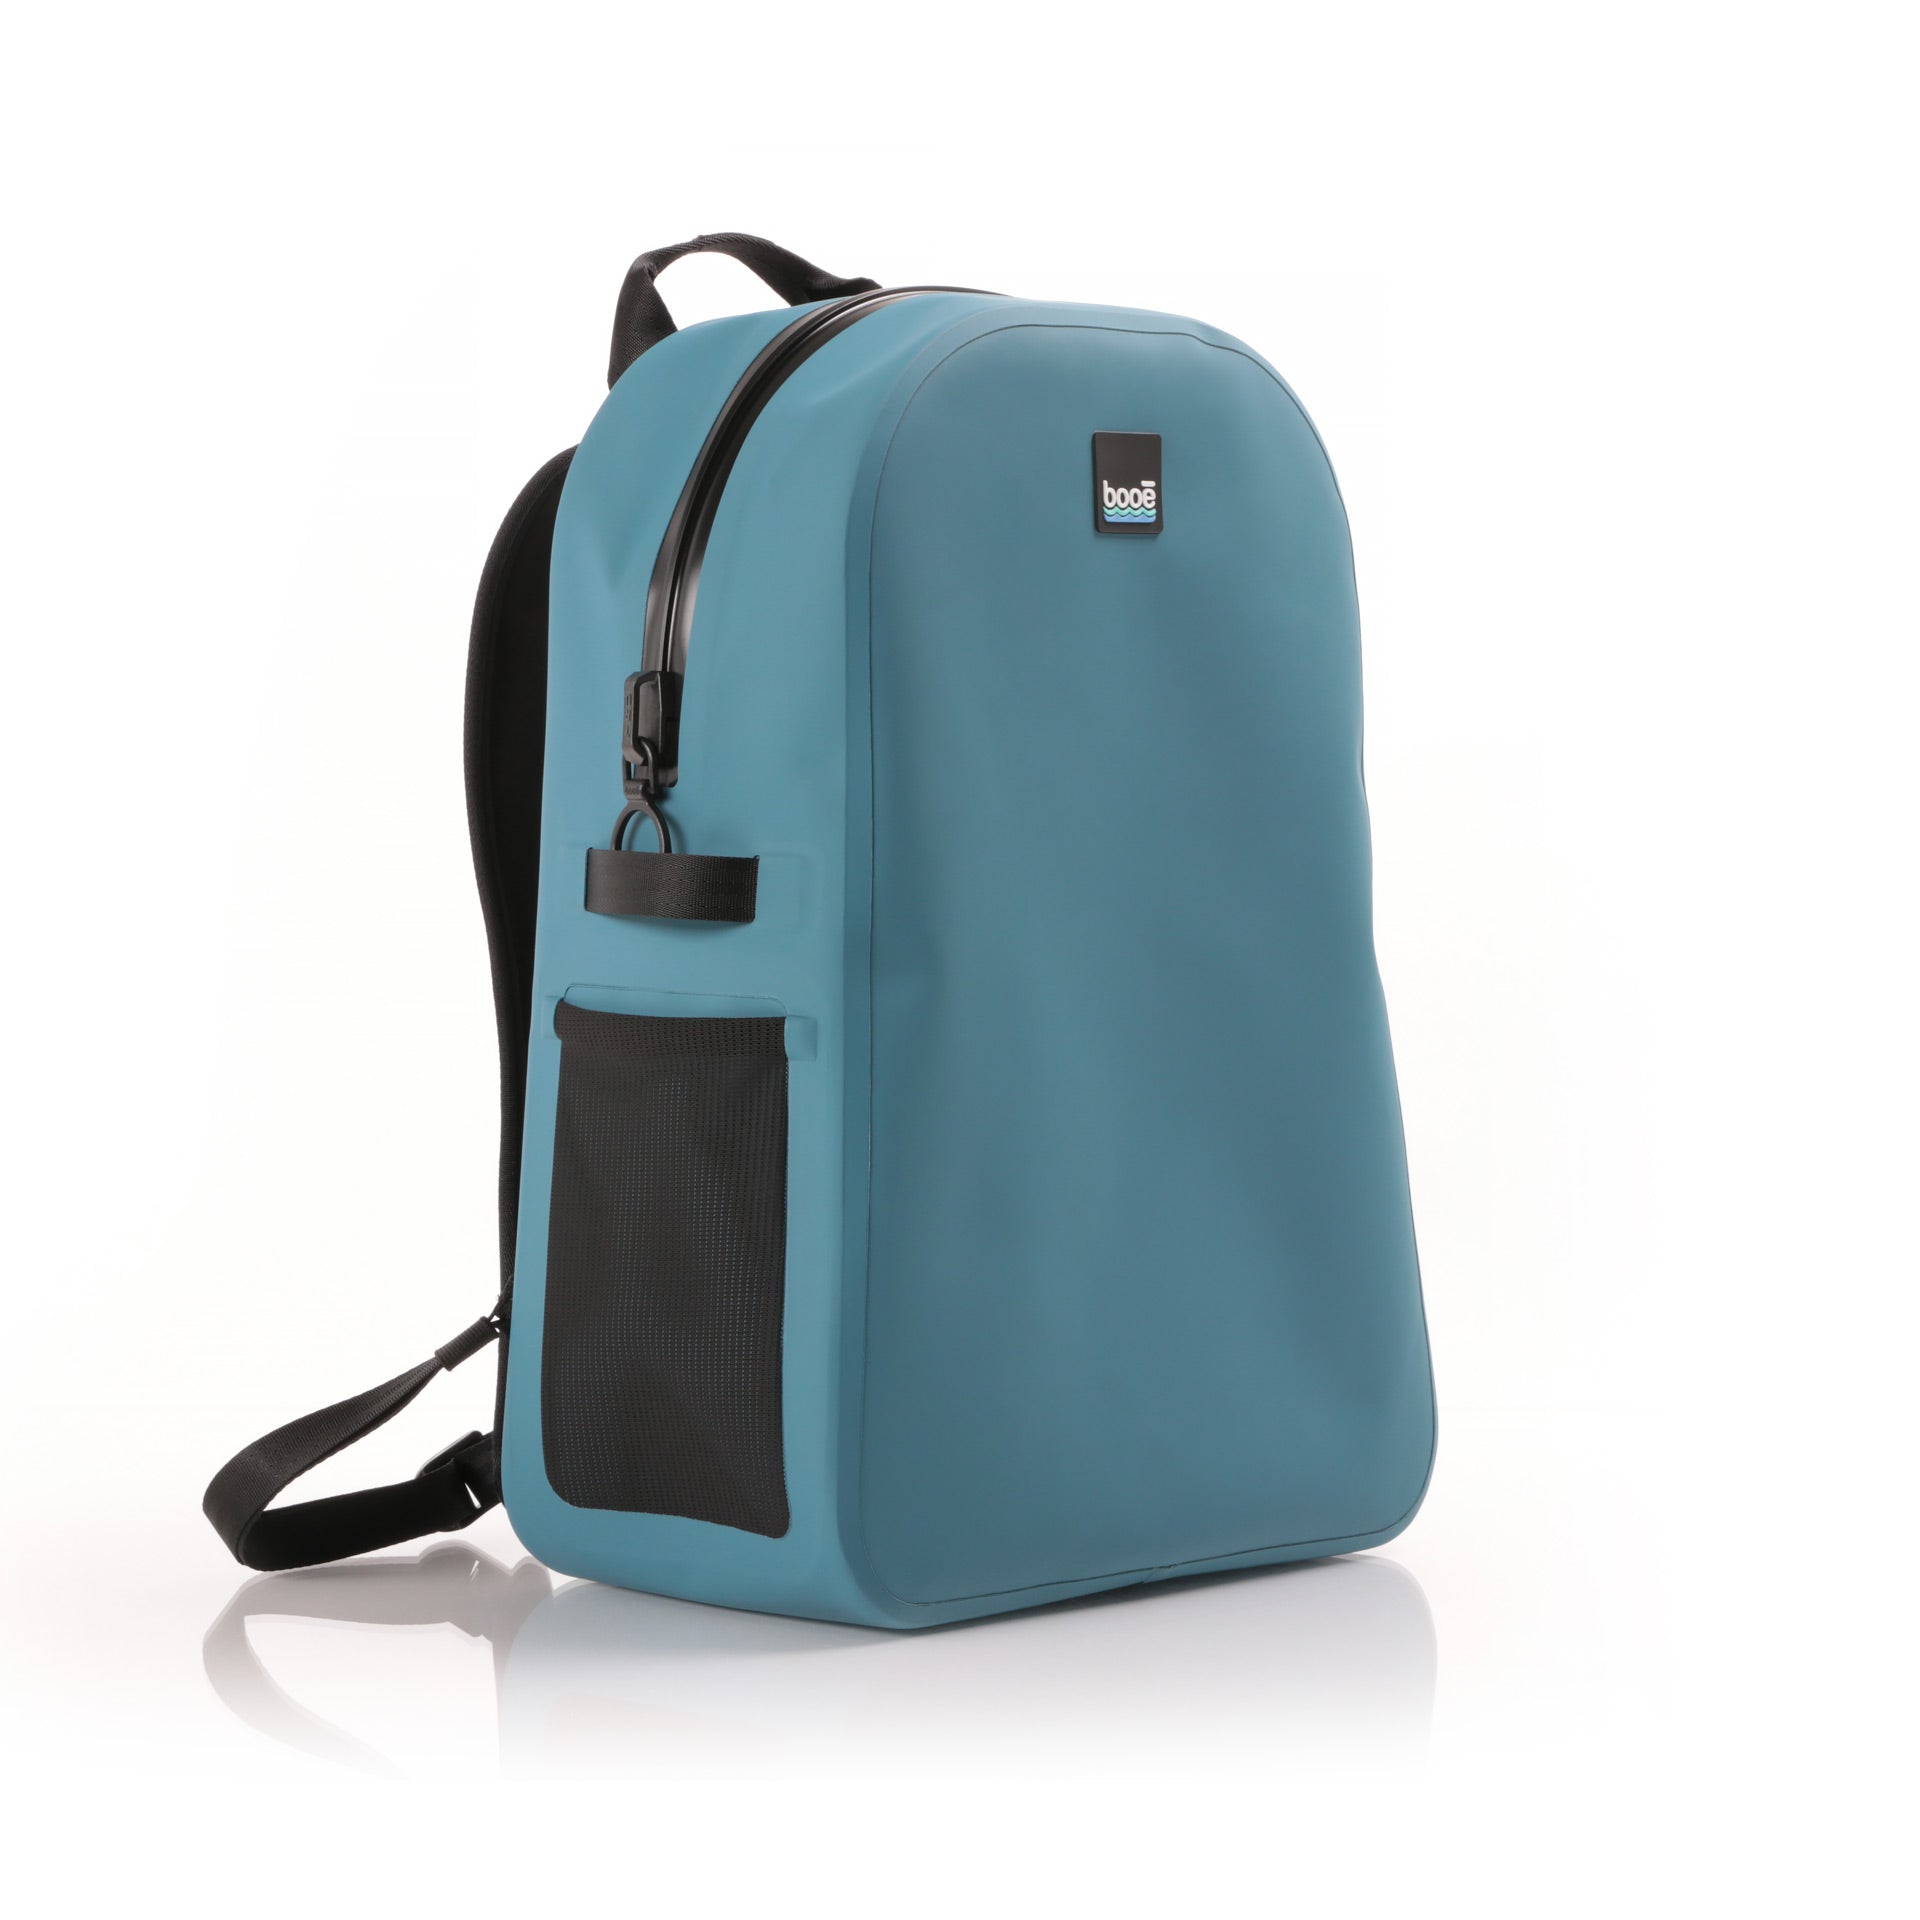 Booe 16L Waterproof Backpack Marine Blue